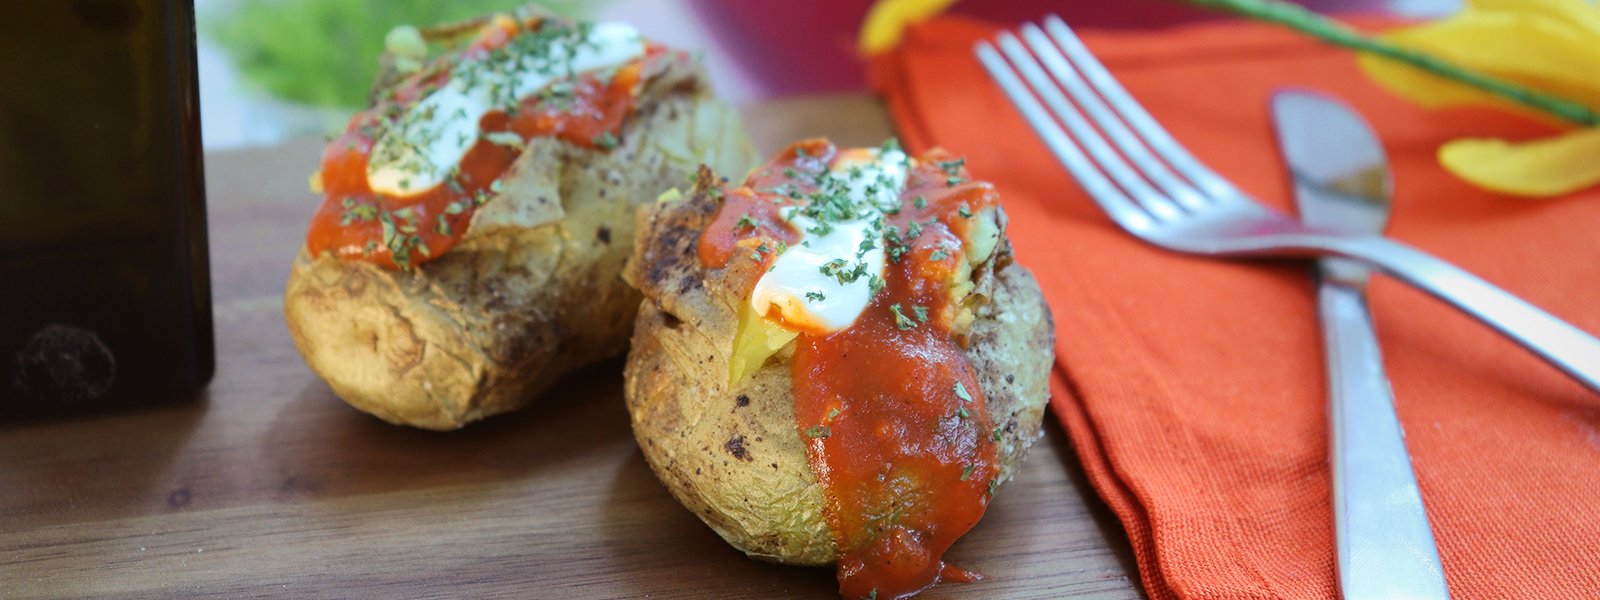 Microwave Baked Potato With Chunky Tomato Sauce